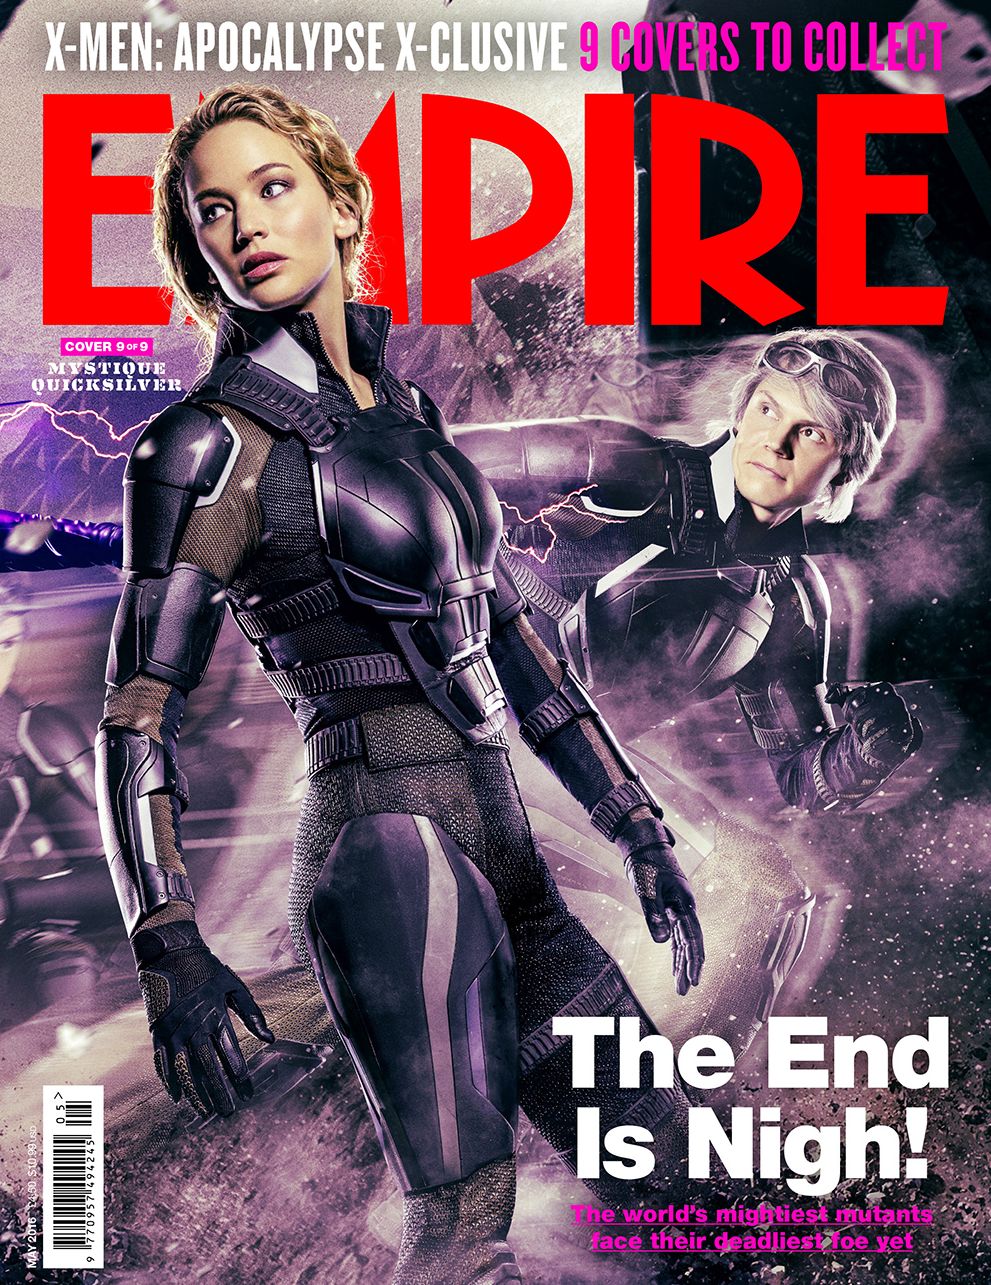 Mystique, Quicksliver X-Men: Apocalypse Empire Cover